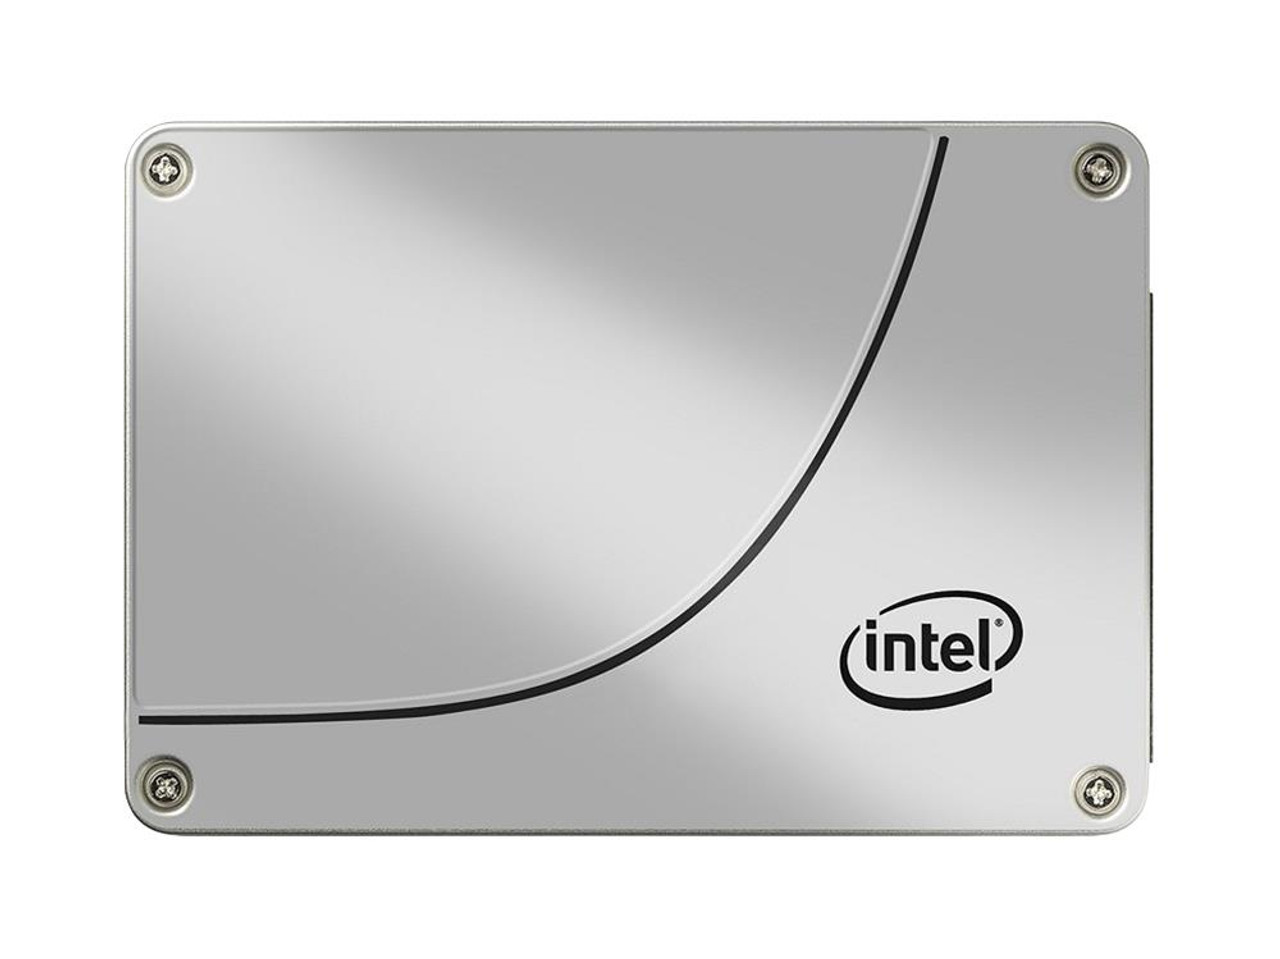 90132Y Intel 320 Series 160GB MLC SATA 3Gbps 2.5-inch Internal Solid State Drive (SSD)